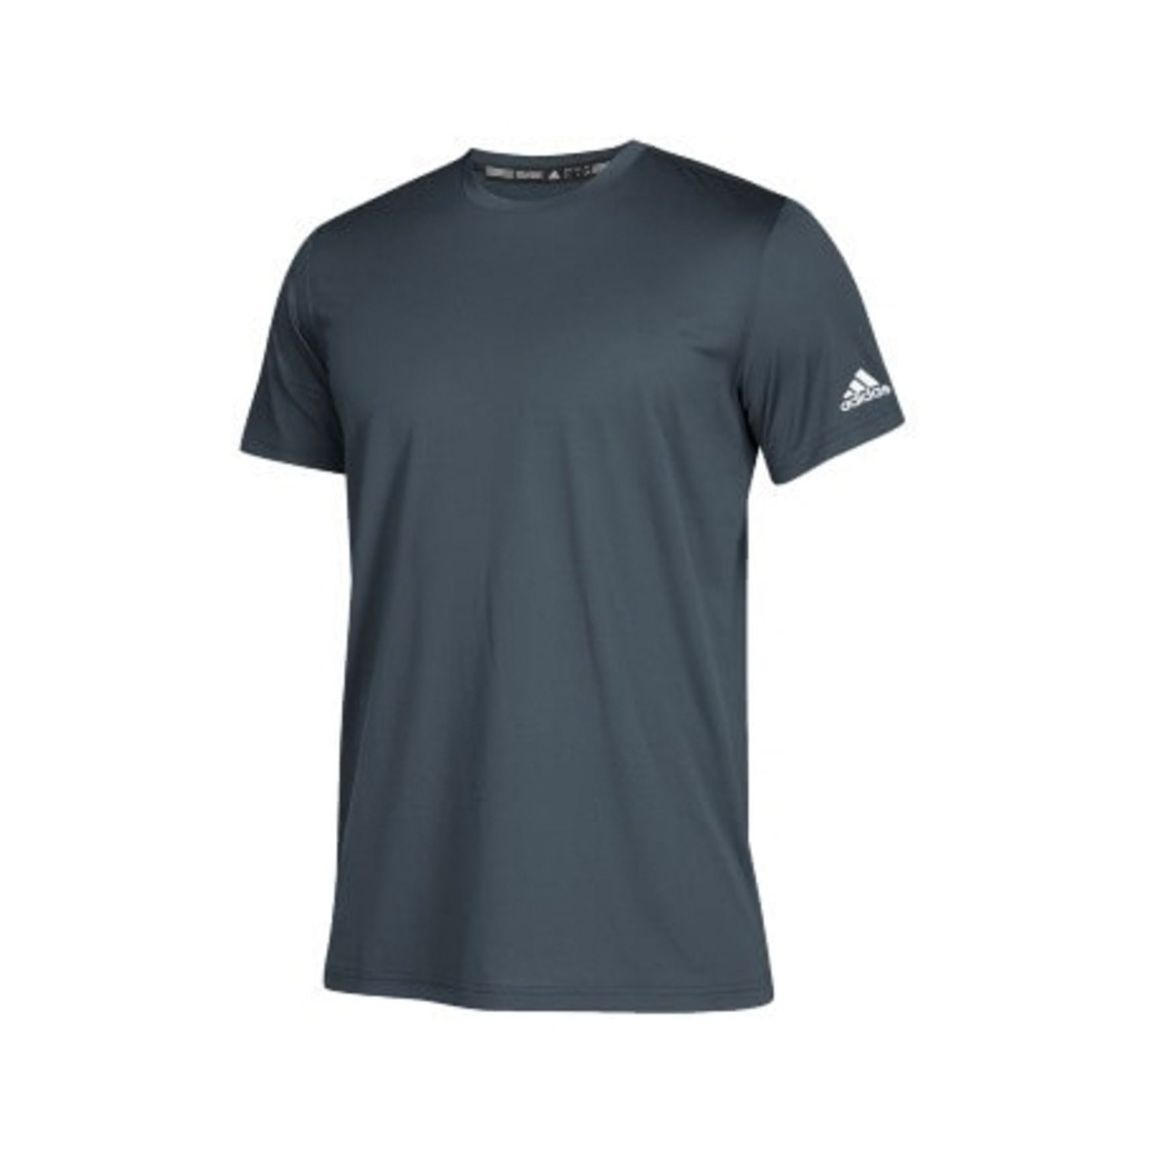 Adidas Men's Clima Tech T-Shirt